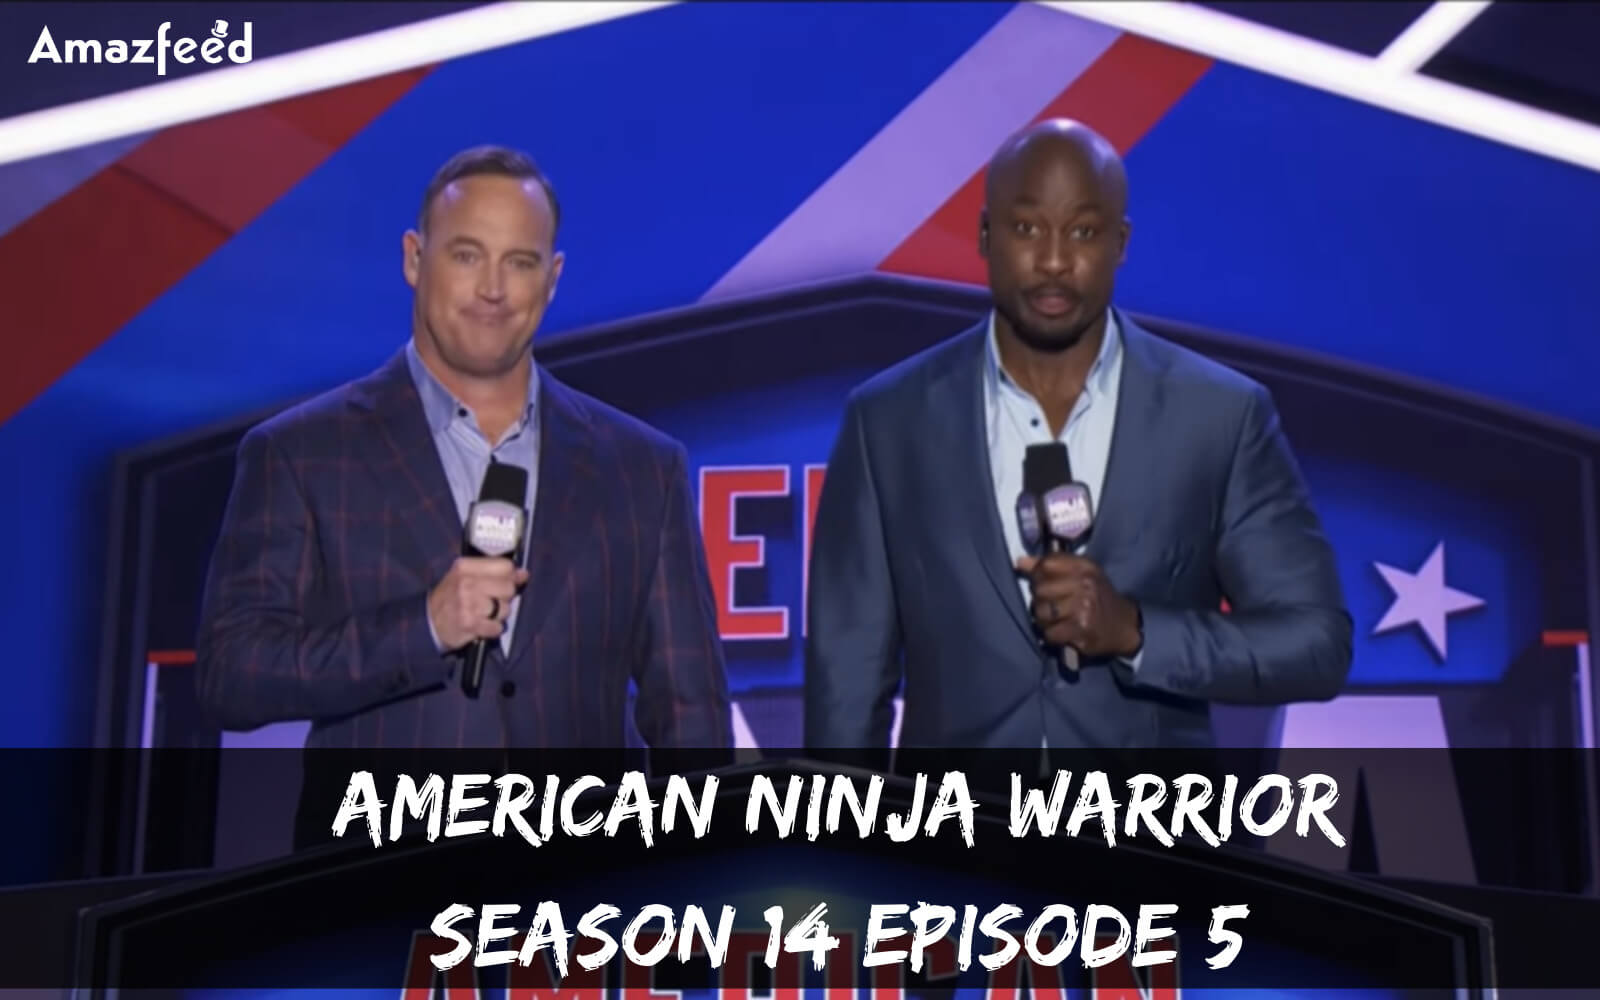 American Ninja Warrior Season 14 Episode 5 release date